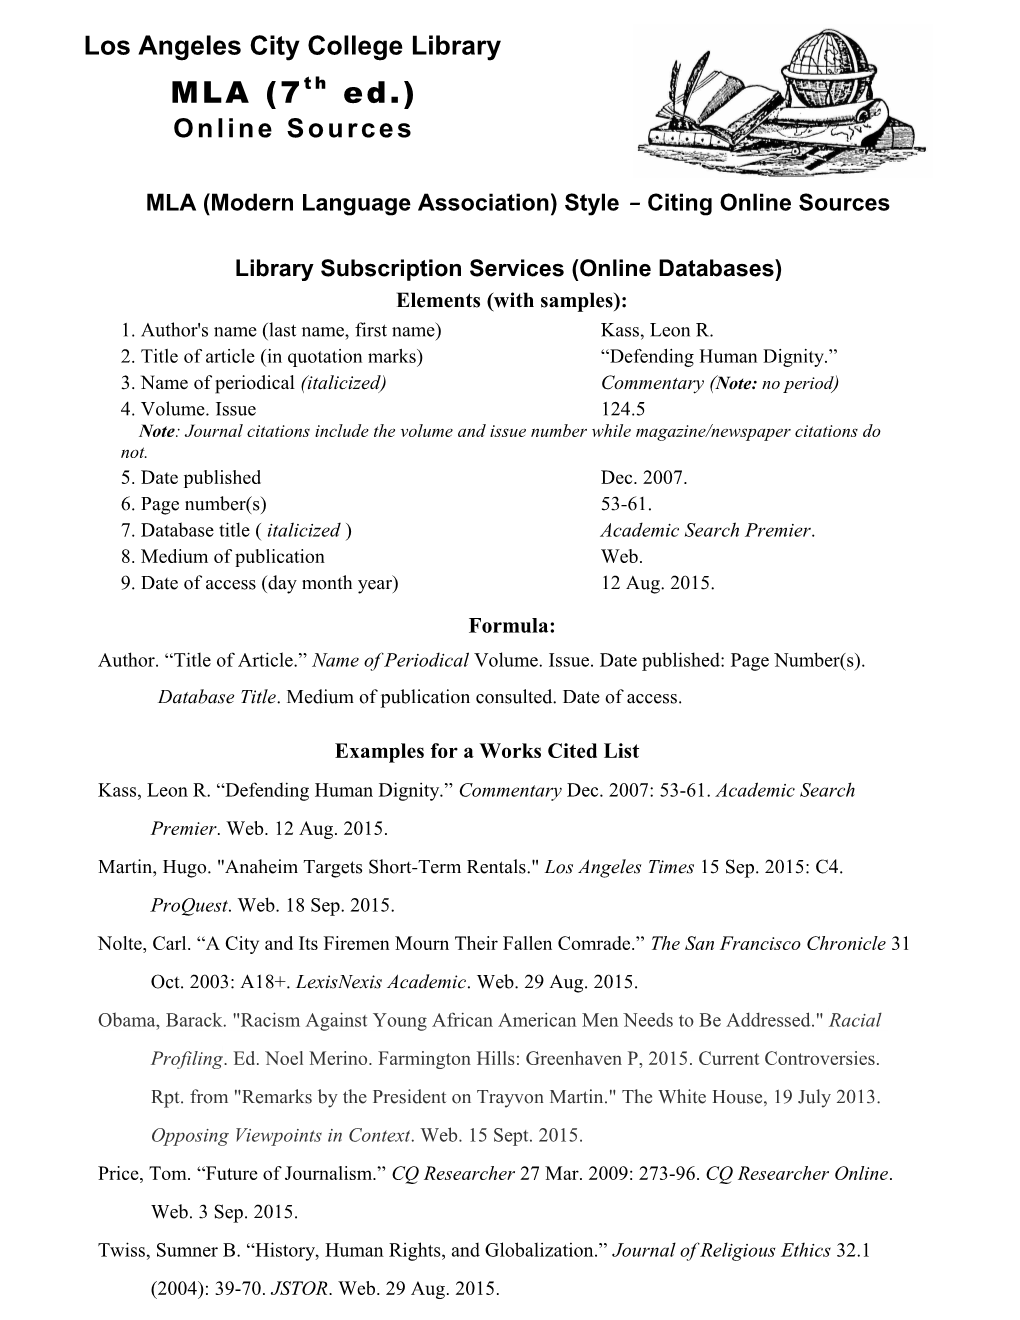 MLA (Modern Language Association) Style - Citing Online Sources